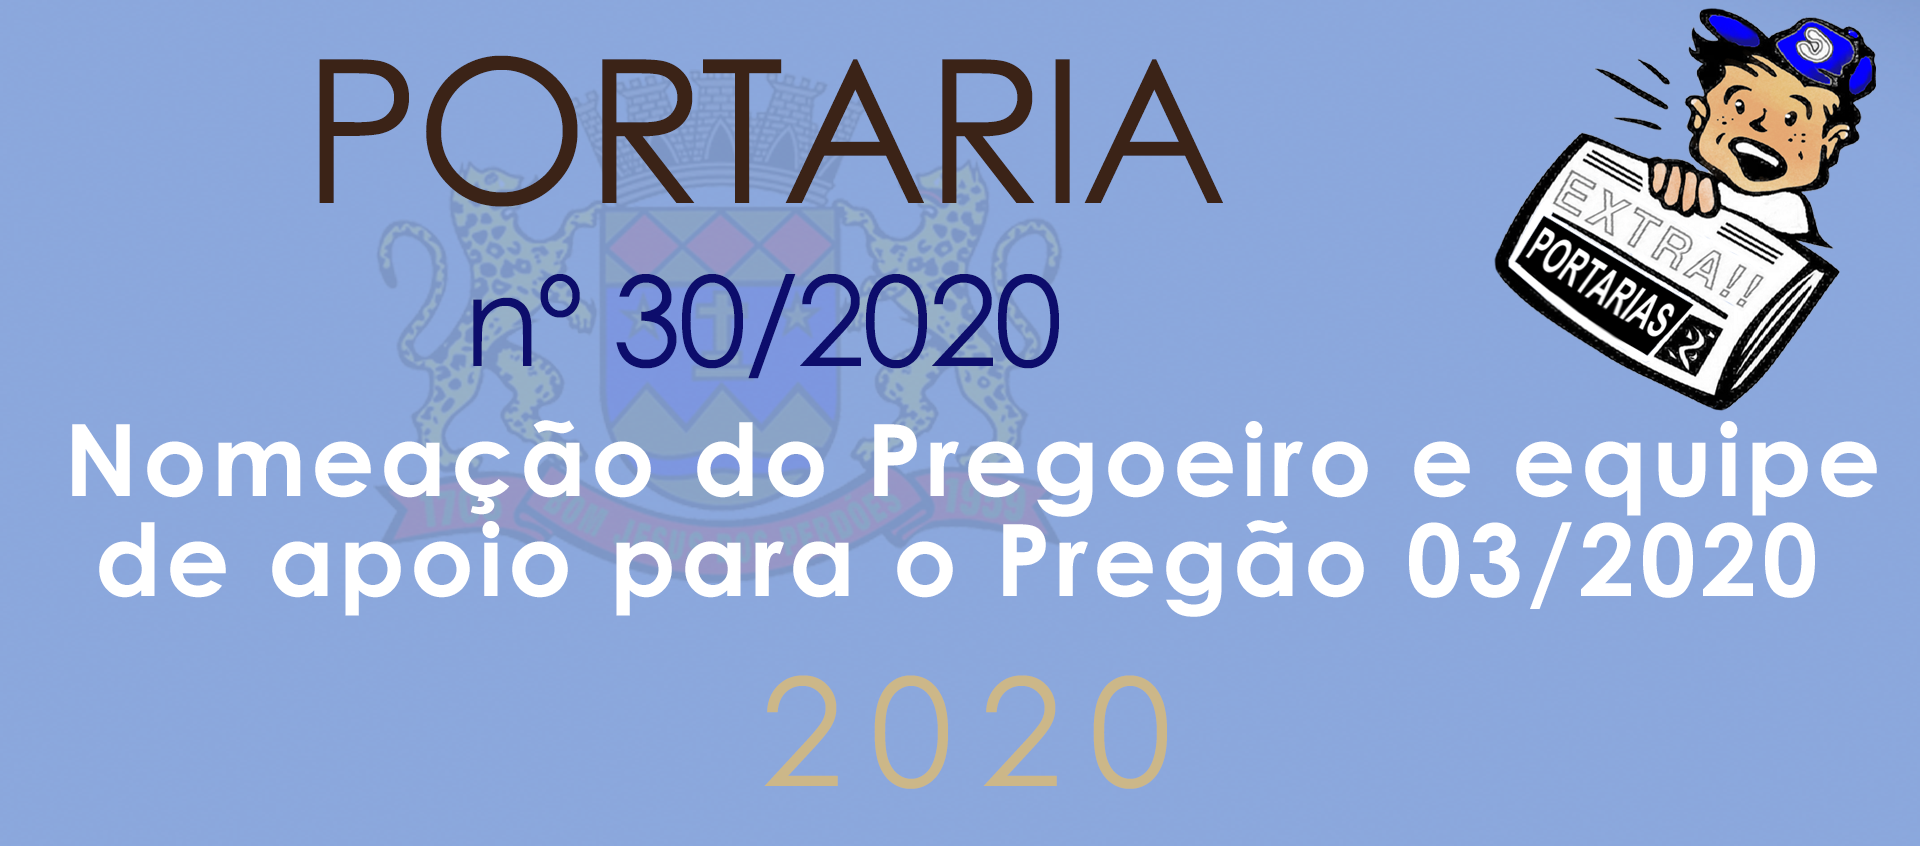 Portaria nº 30/2020